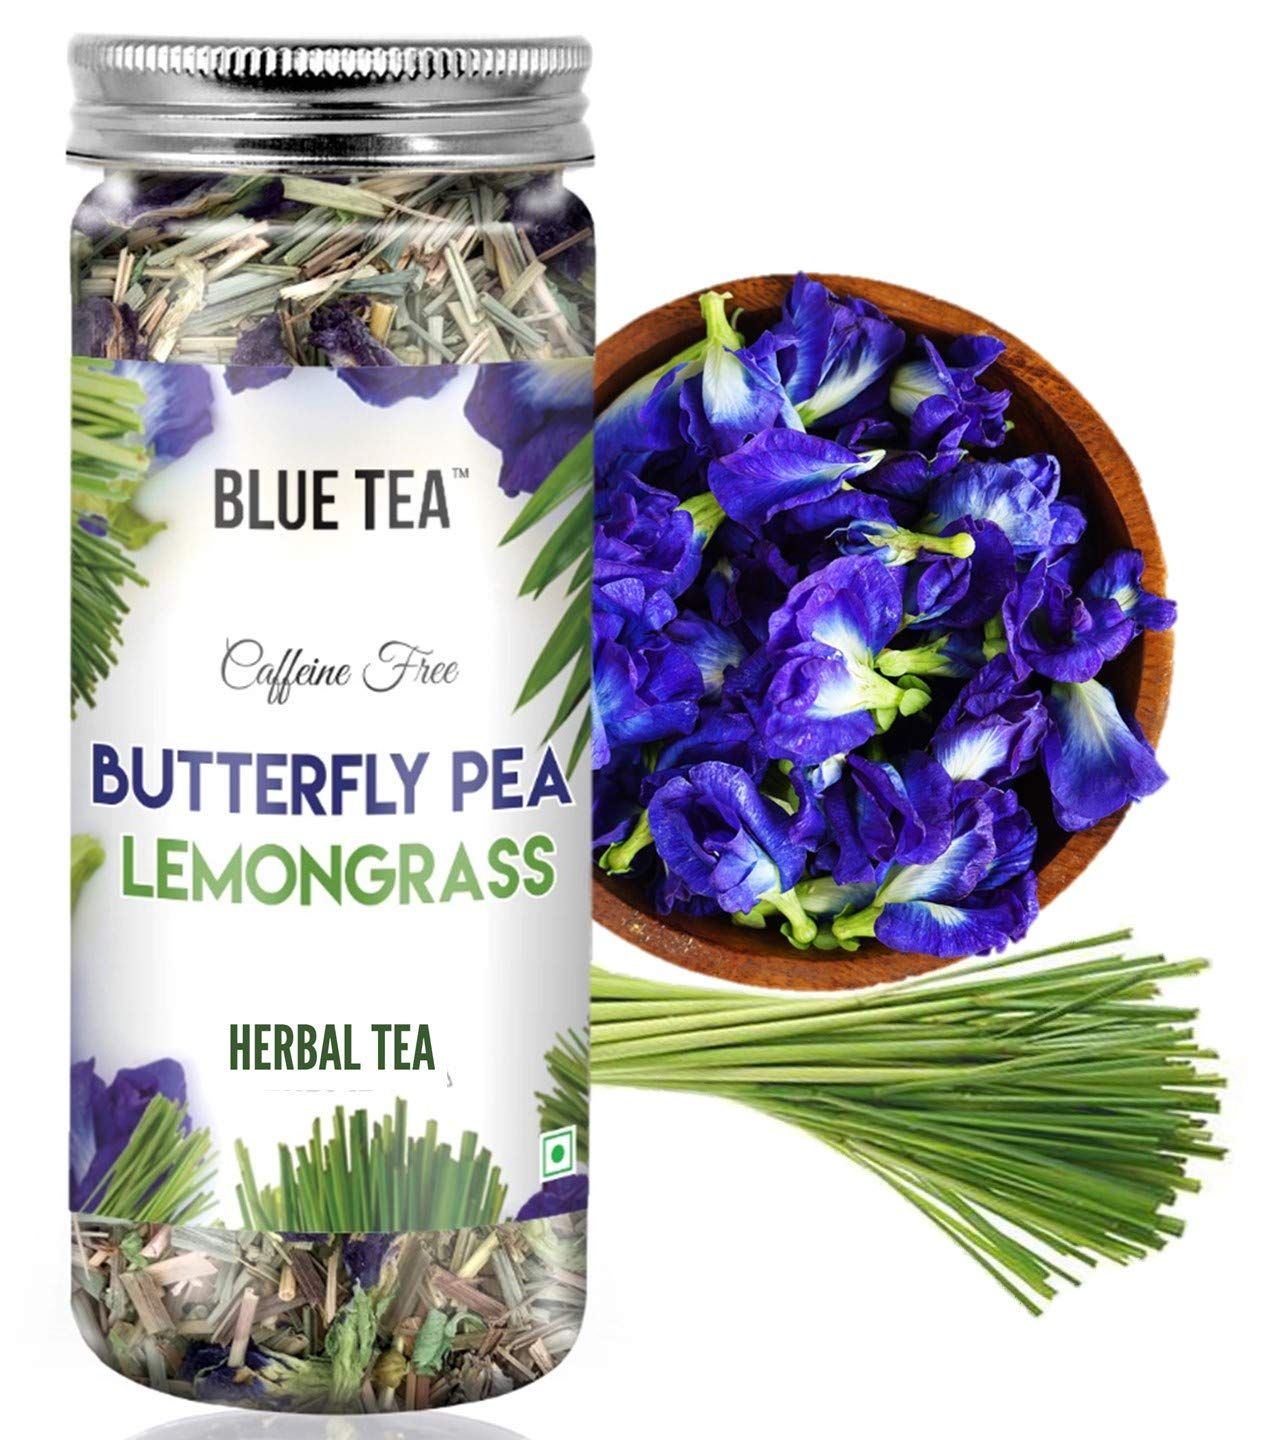 BLUE TEA Butterfly Pea Lemongrass HerbalTea Image